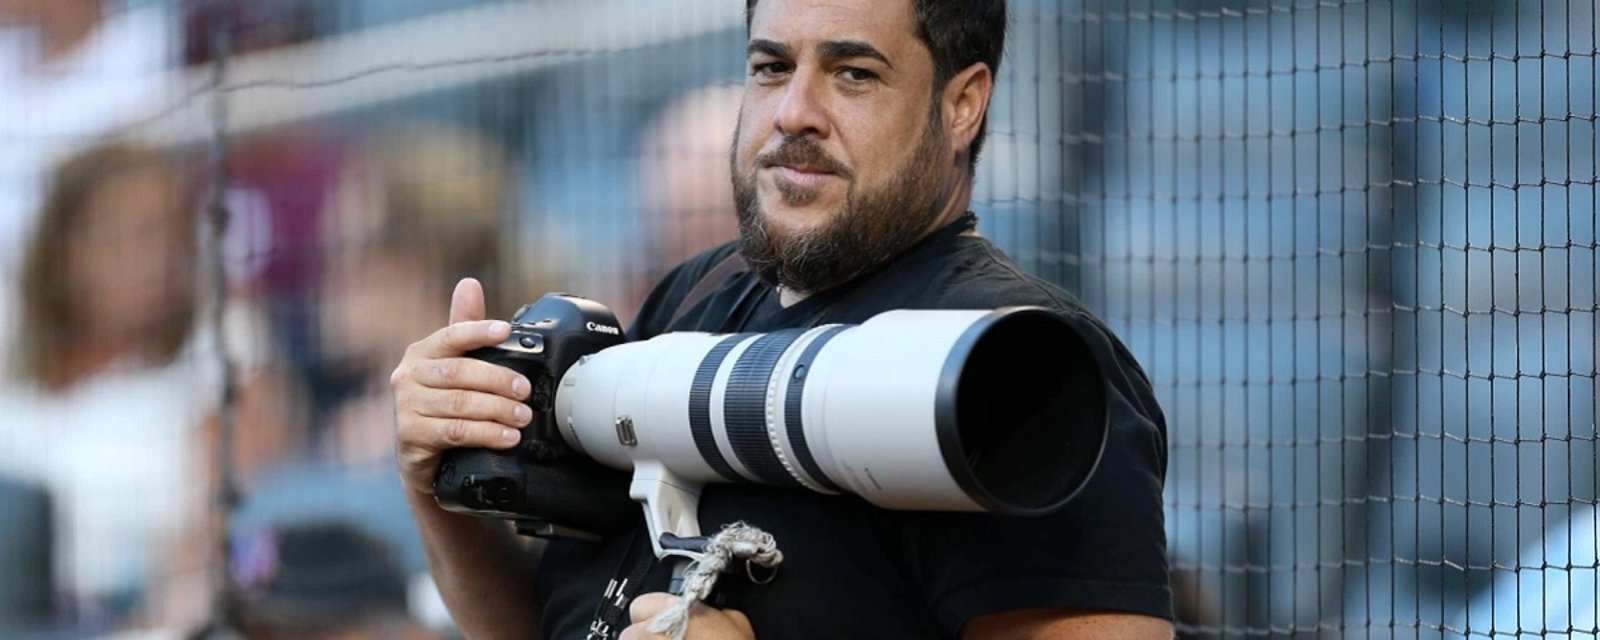 New York Sports photographer Anthony Causi has died of the coronavirus.